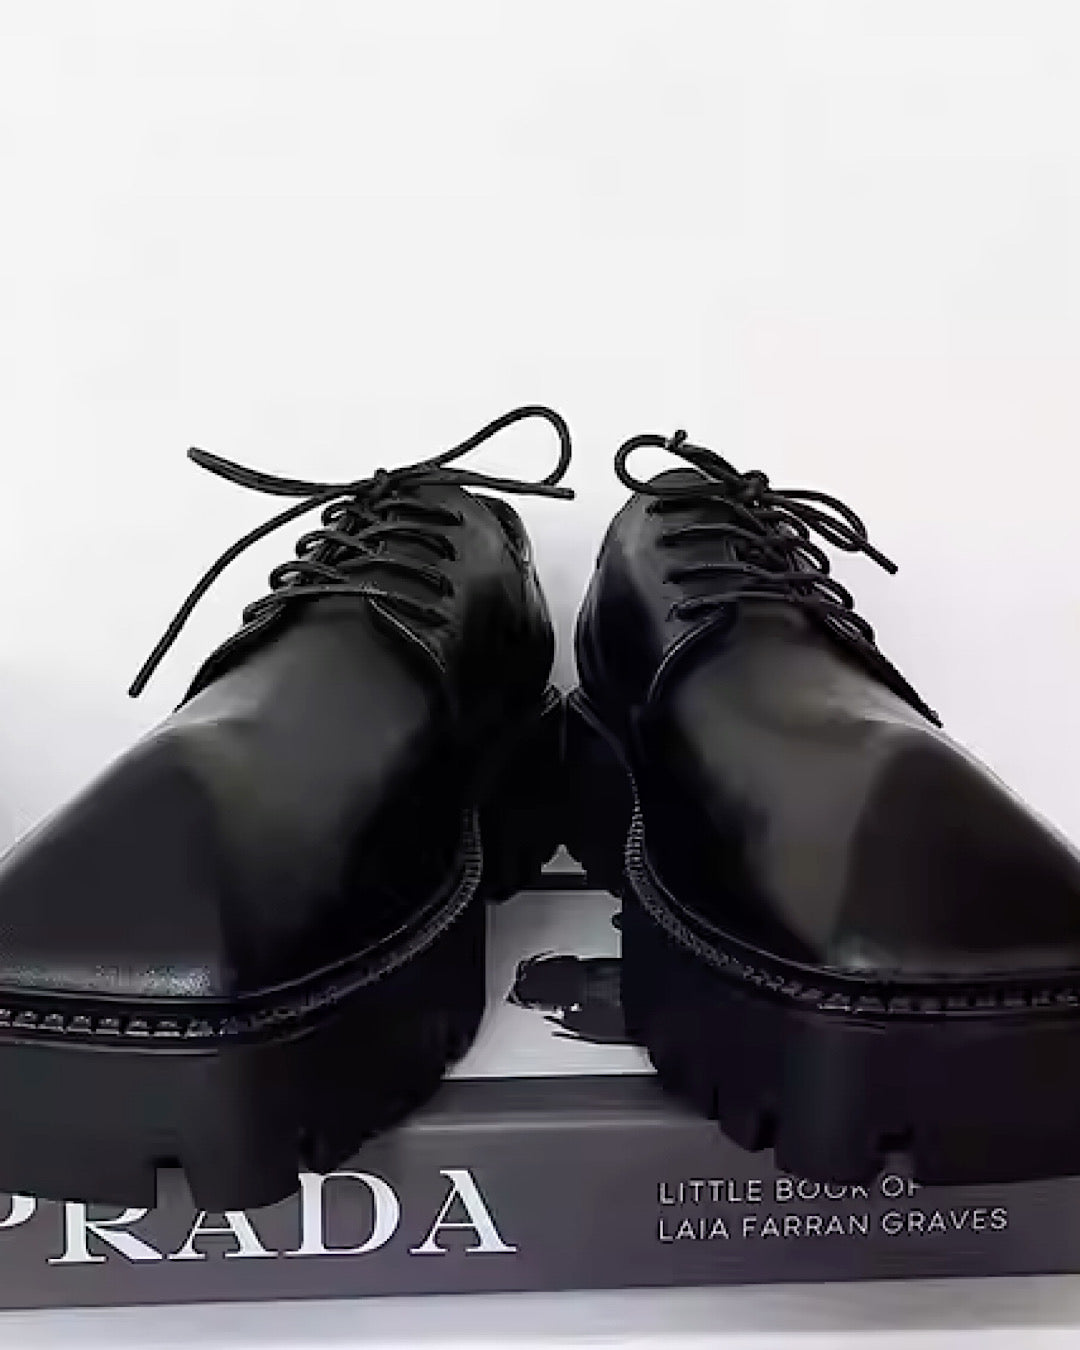 Angular silhouette design simple black shoes HL2940